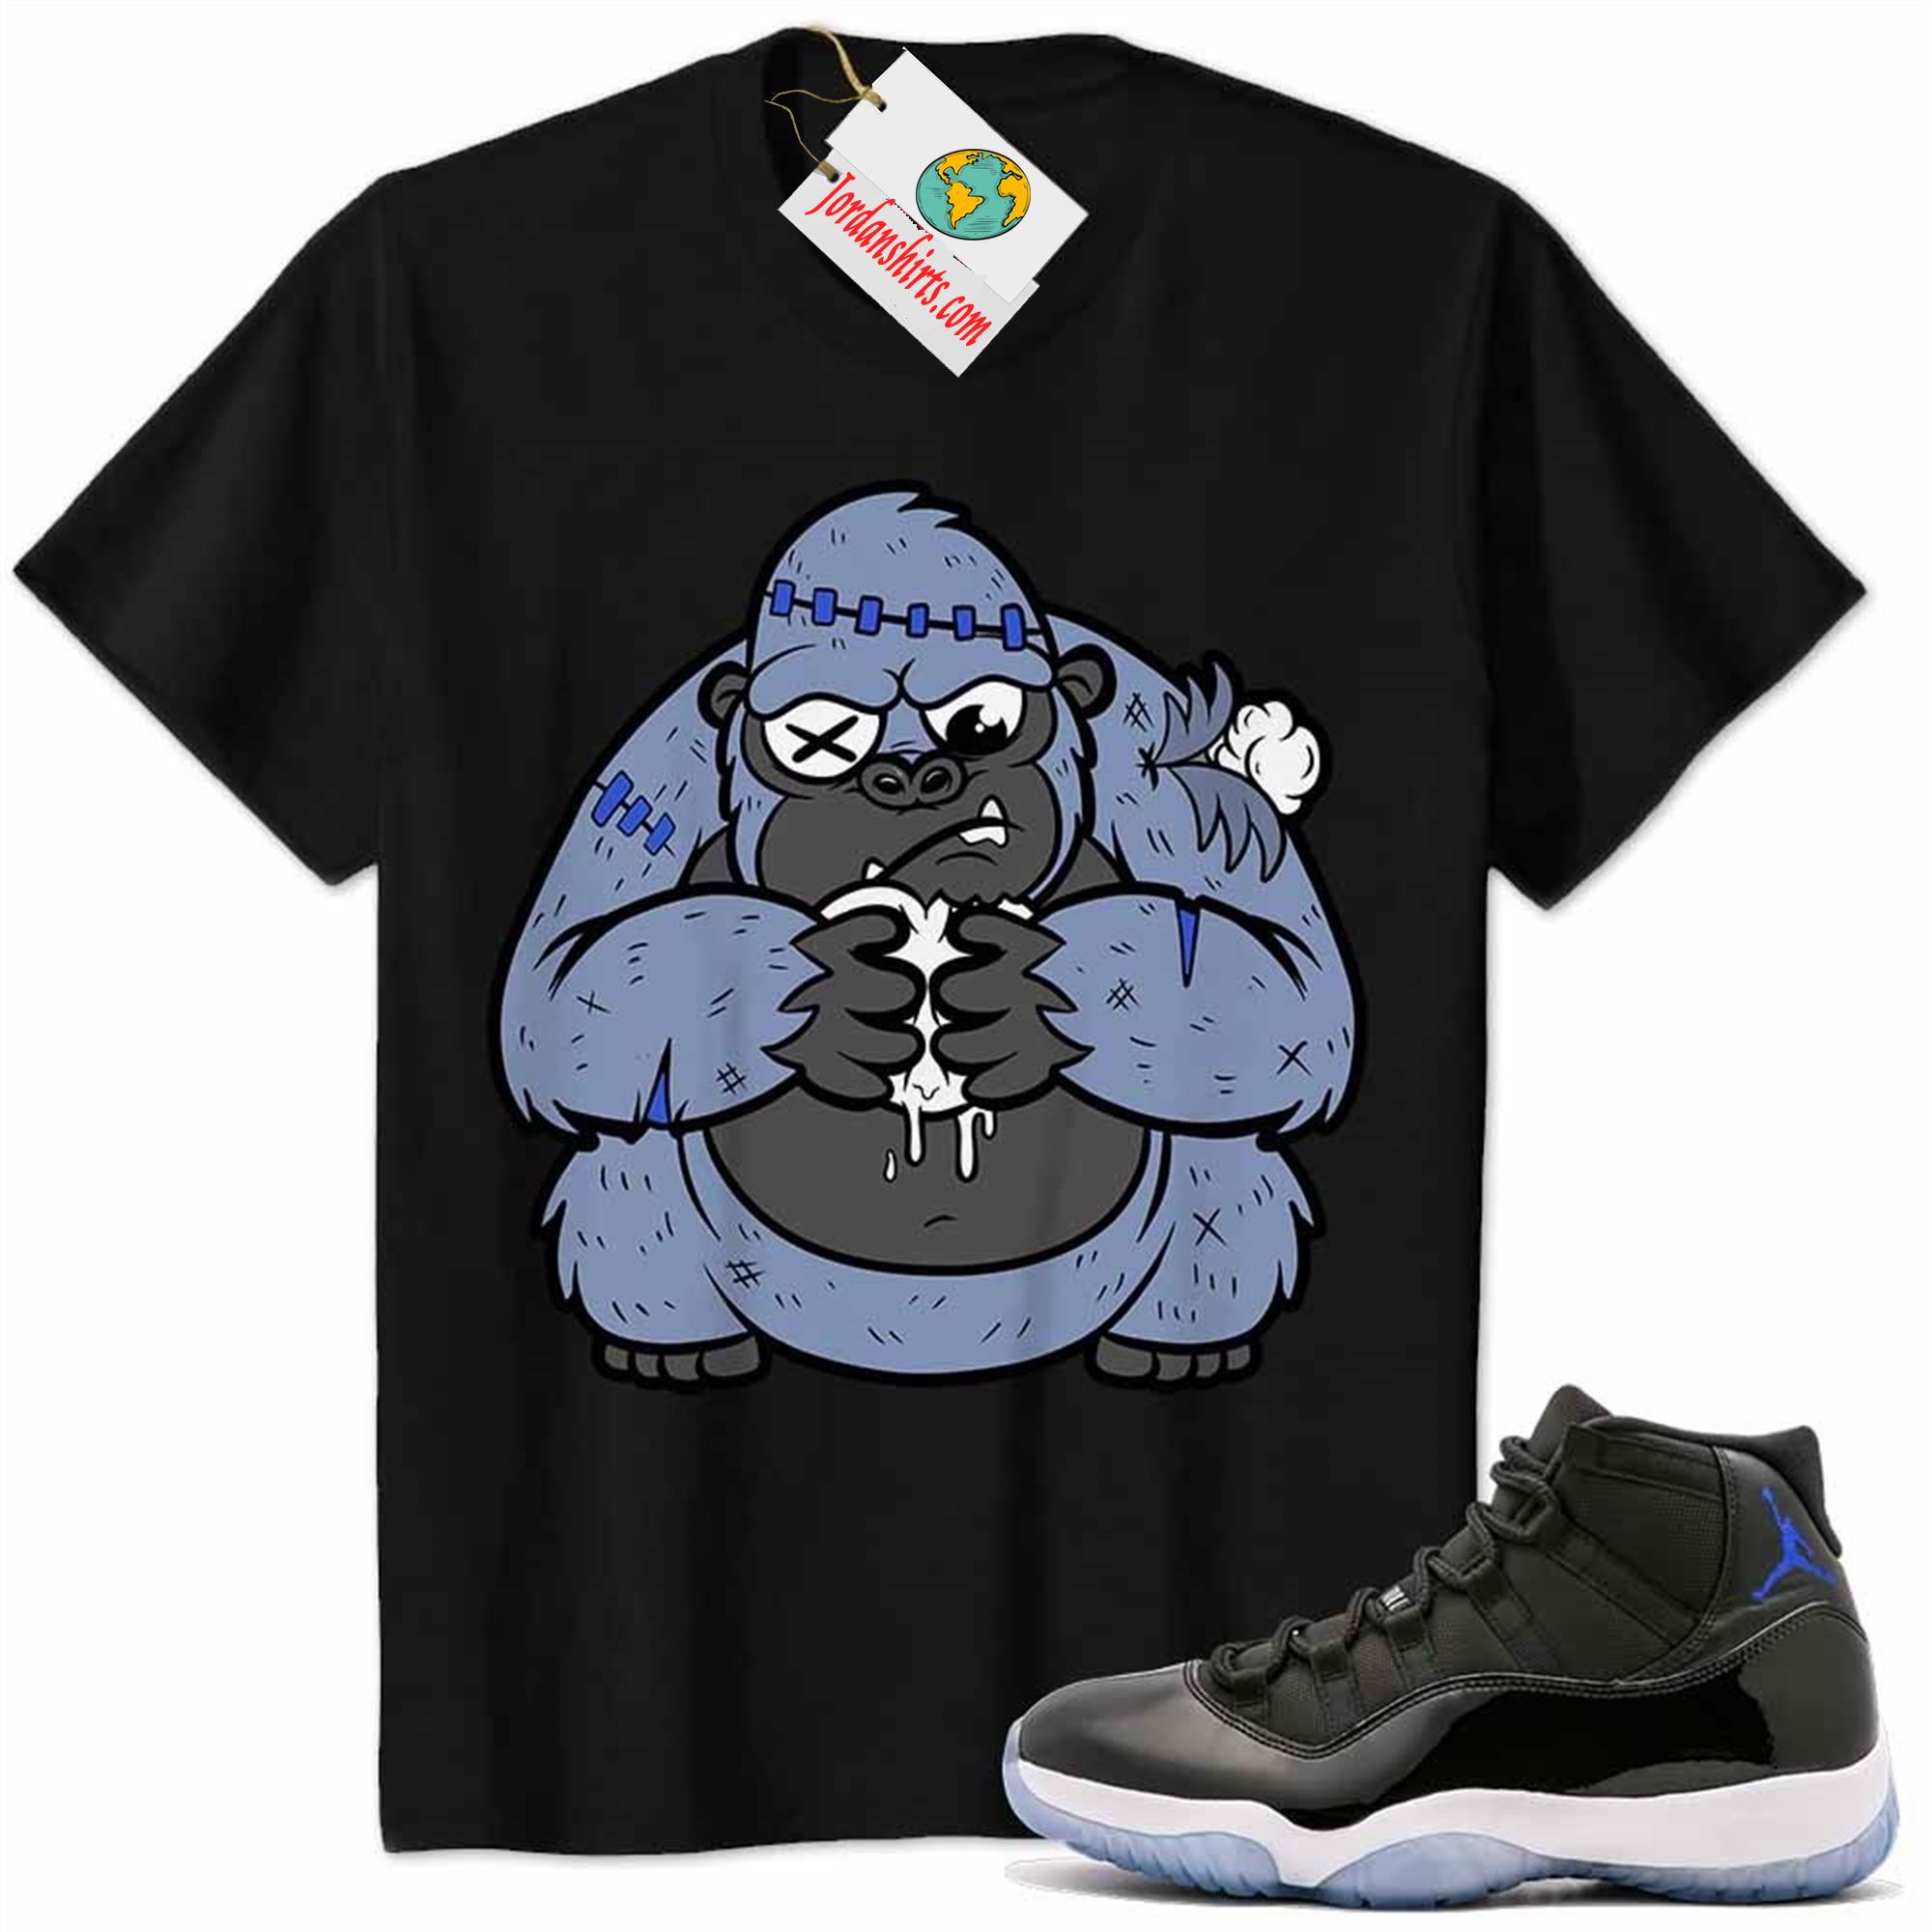 Jordan 11 Shirt, Cute Monkey Broken Heart Black Air Jordan 11 Space Jam 11s Size Up To 5xl